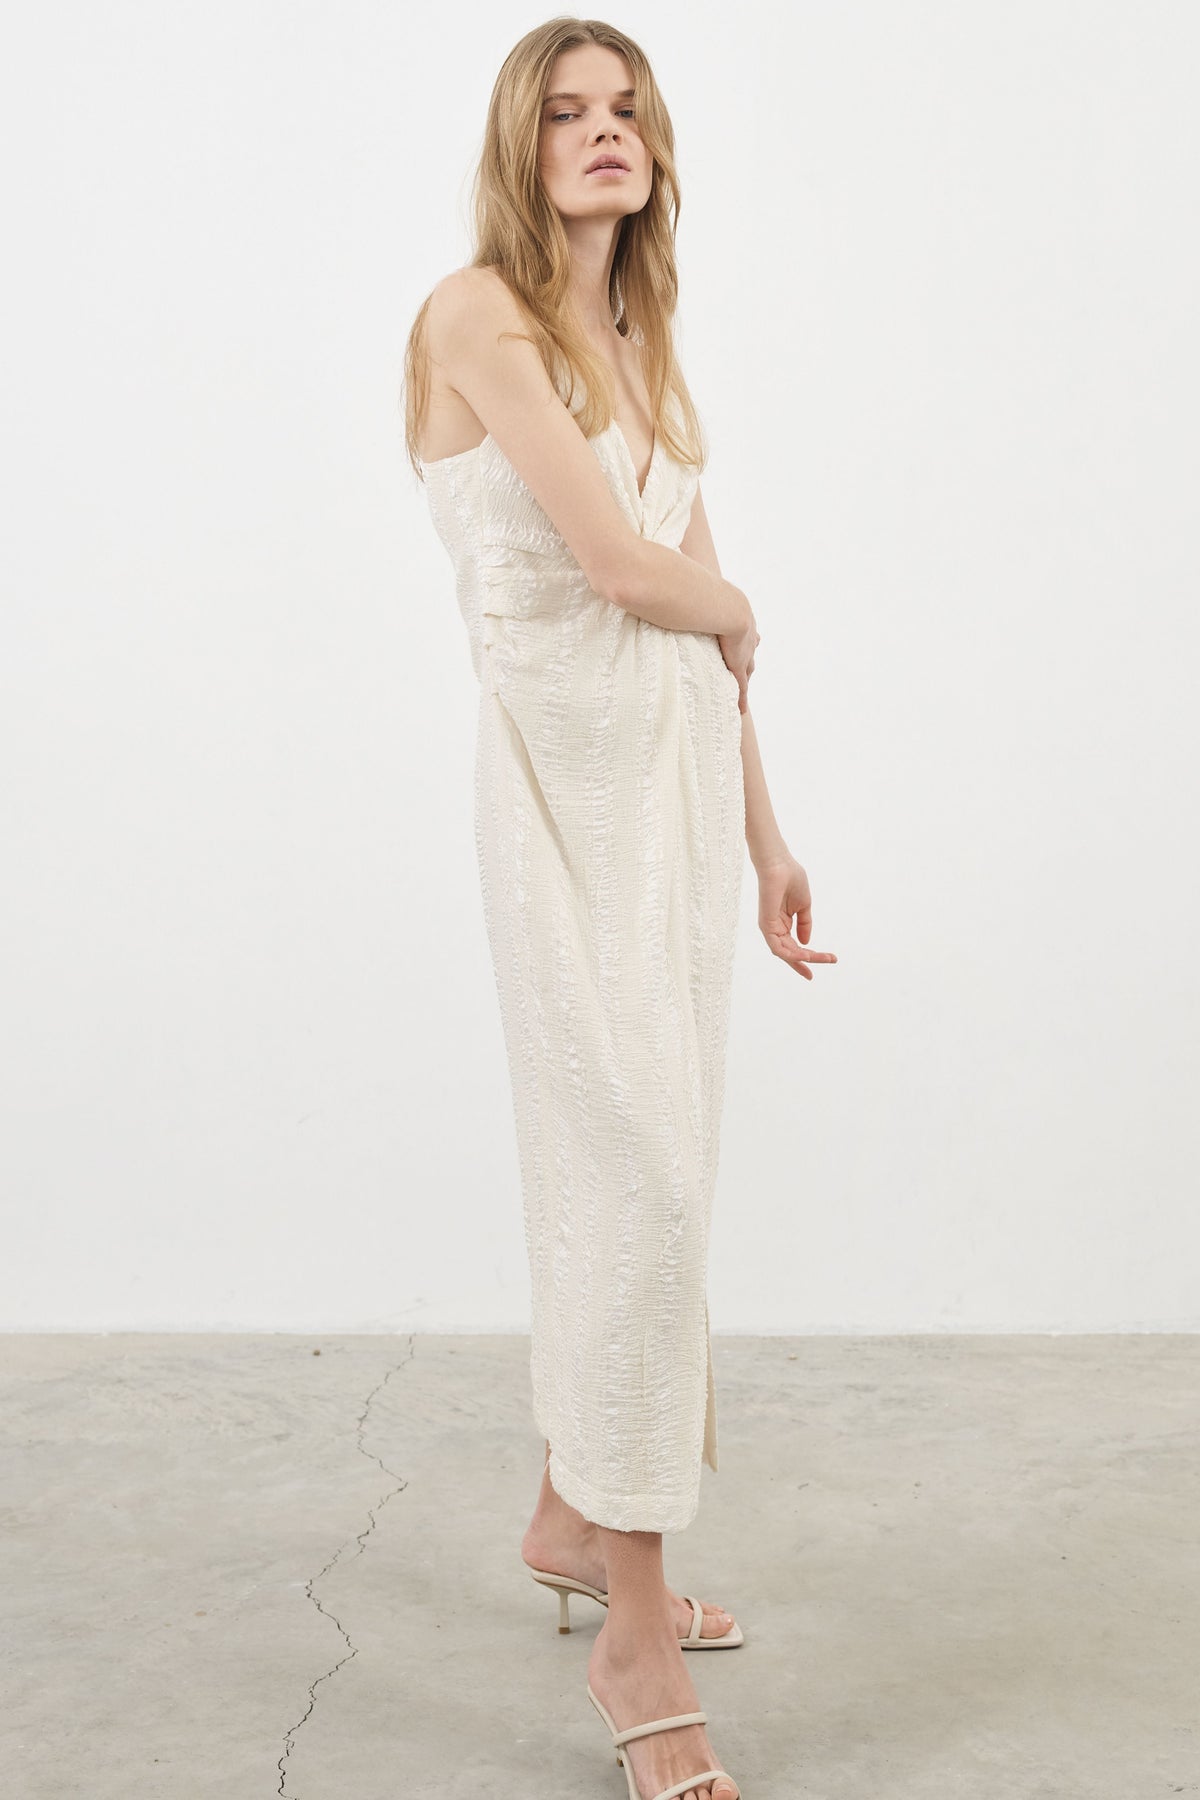 THE HAND LOOM Celia 100% Organic Cotton Womens Dress - Natural